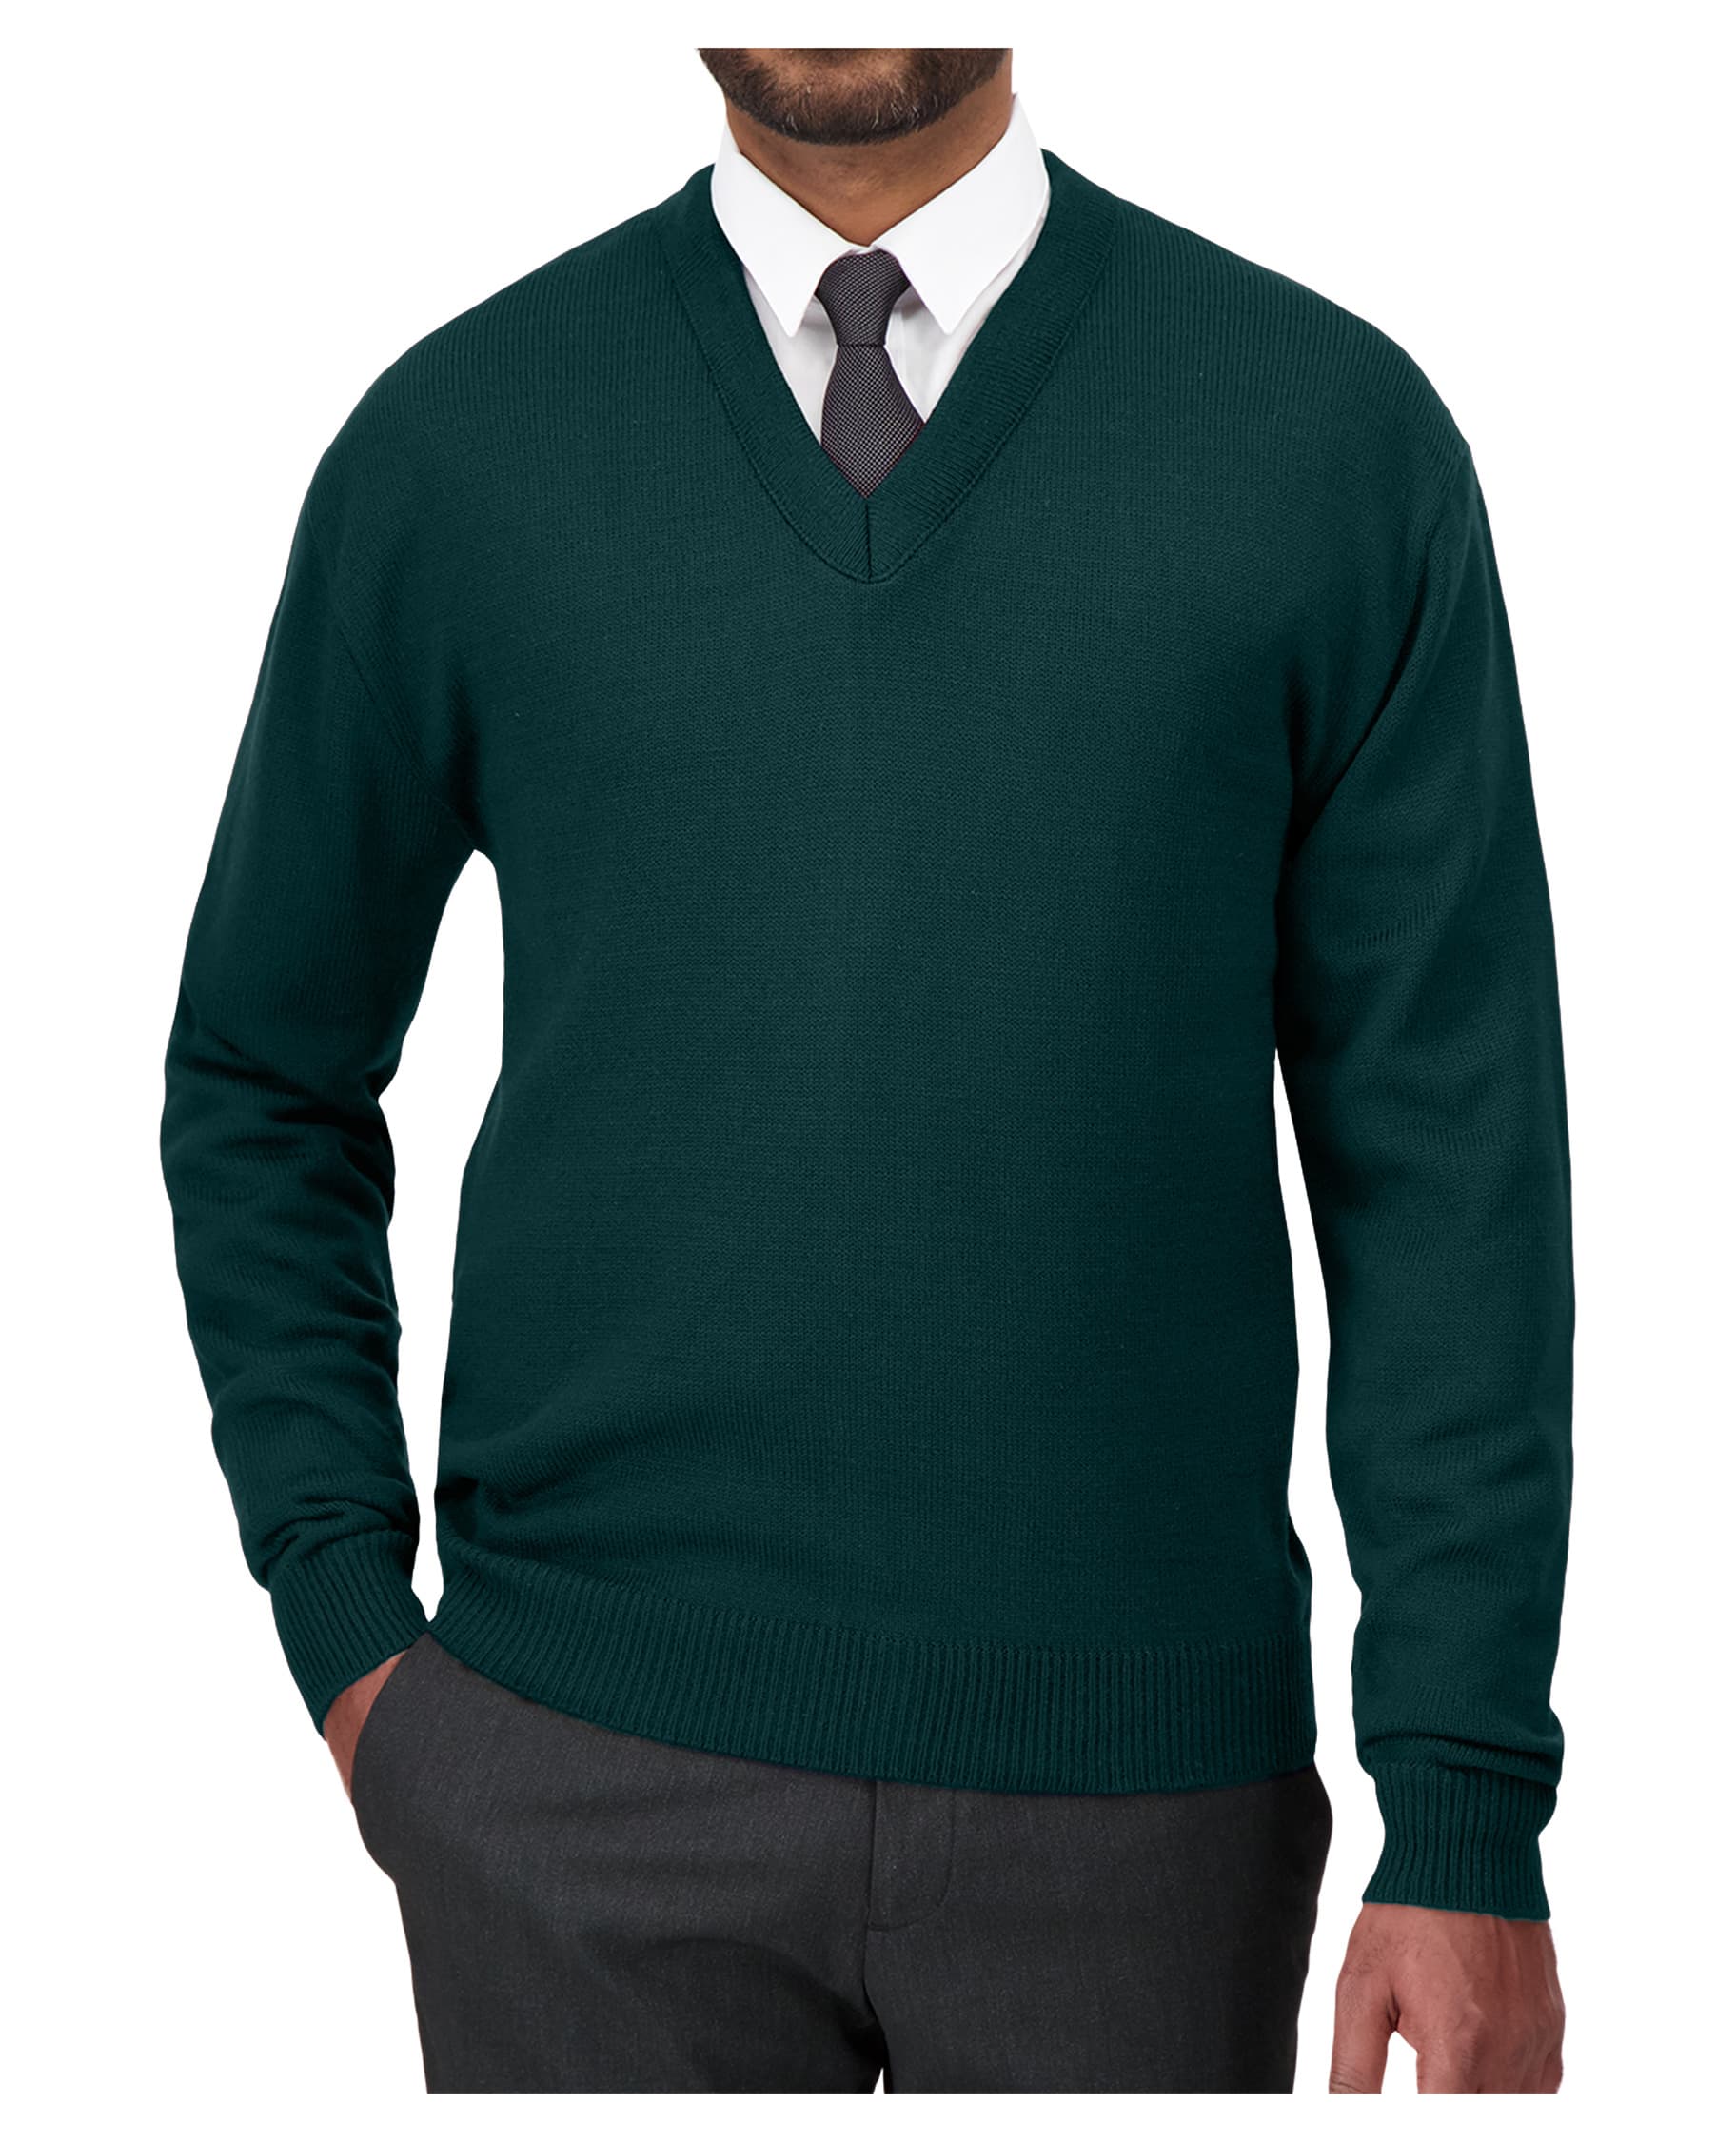 green v-neck uniform sweater